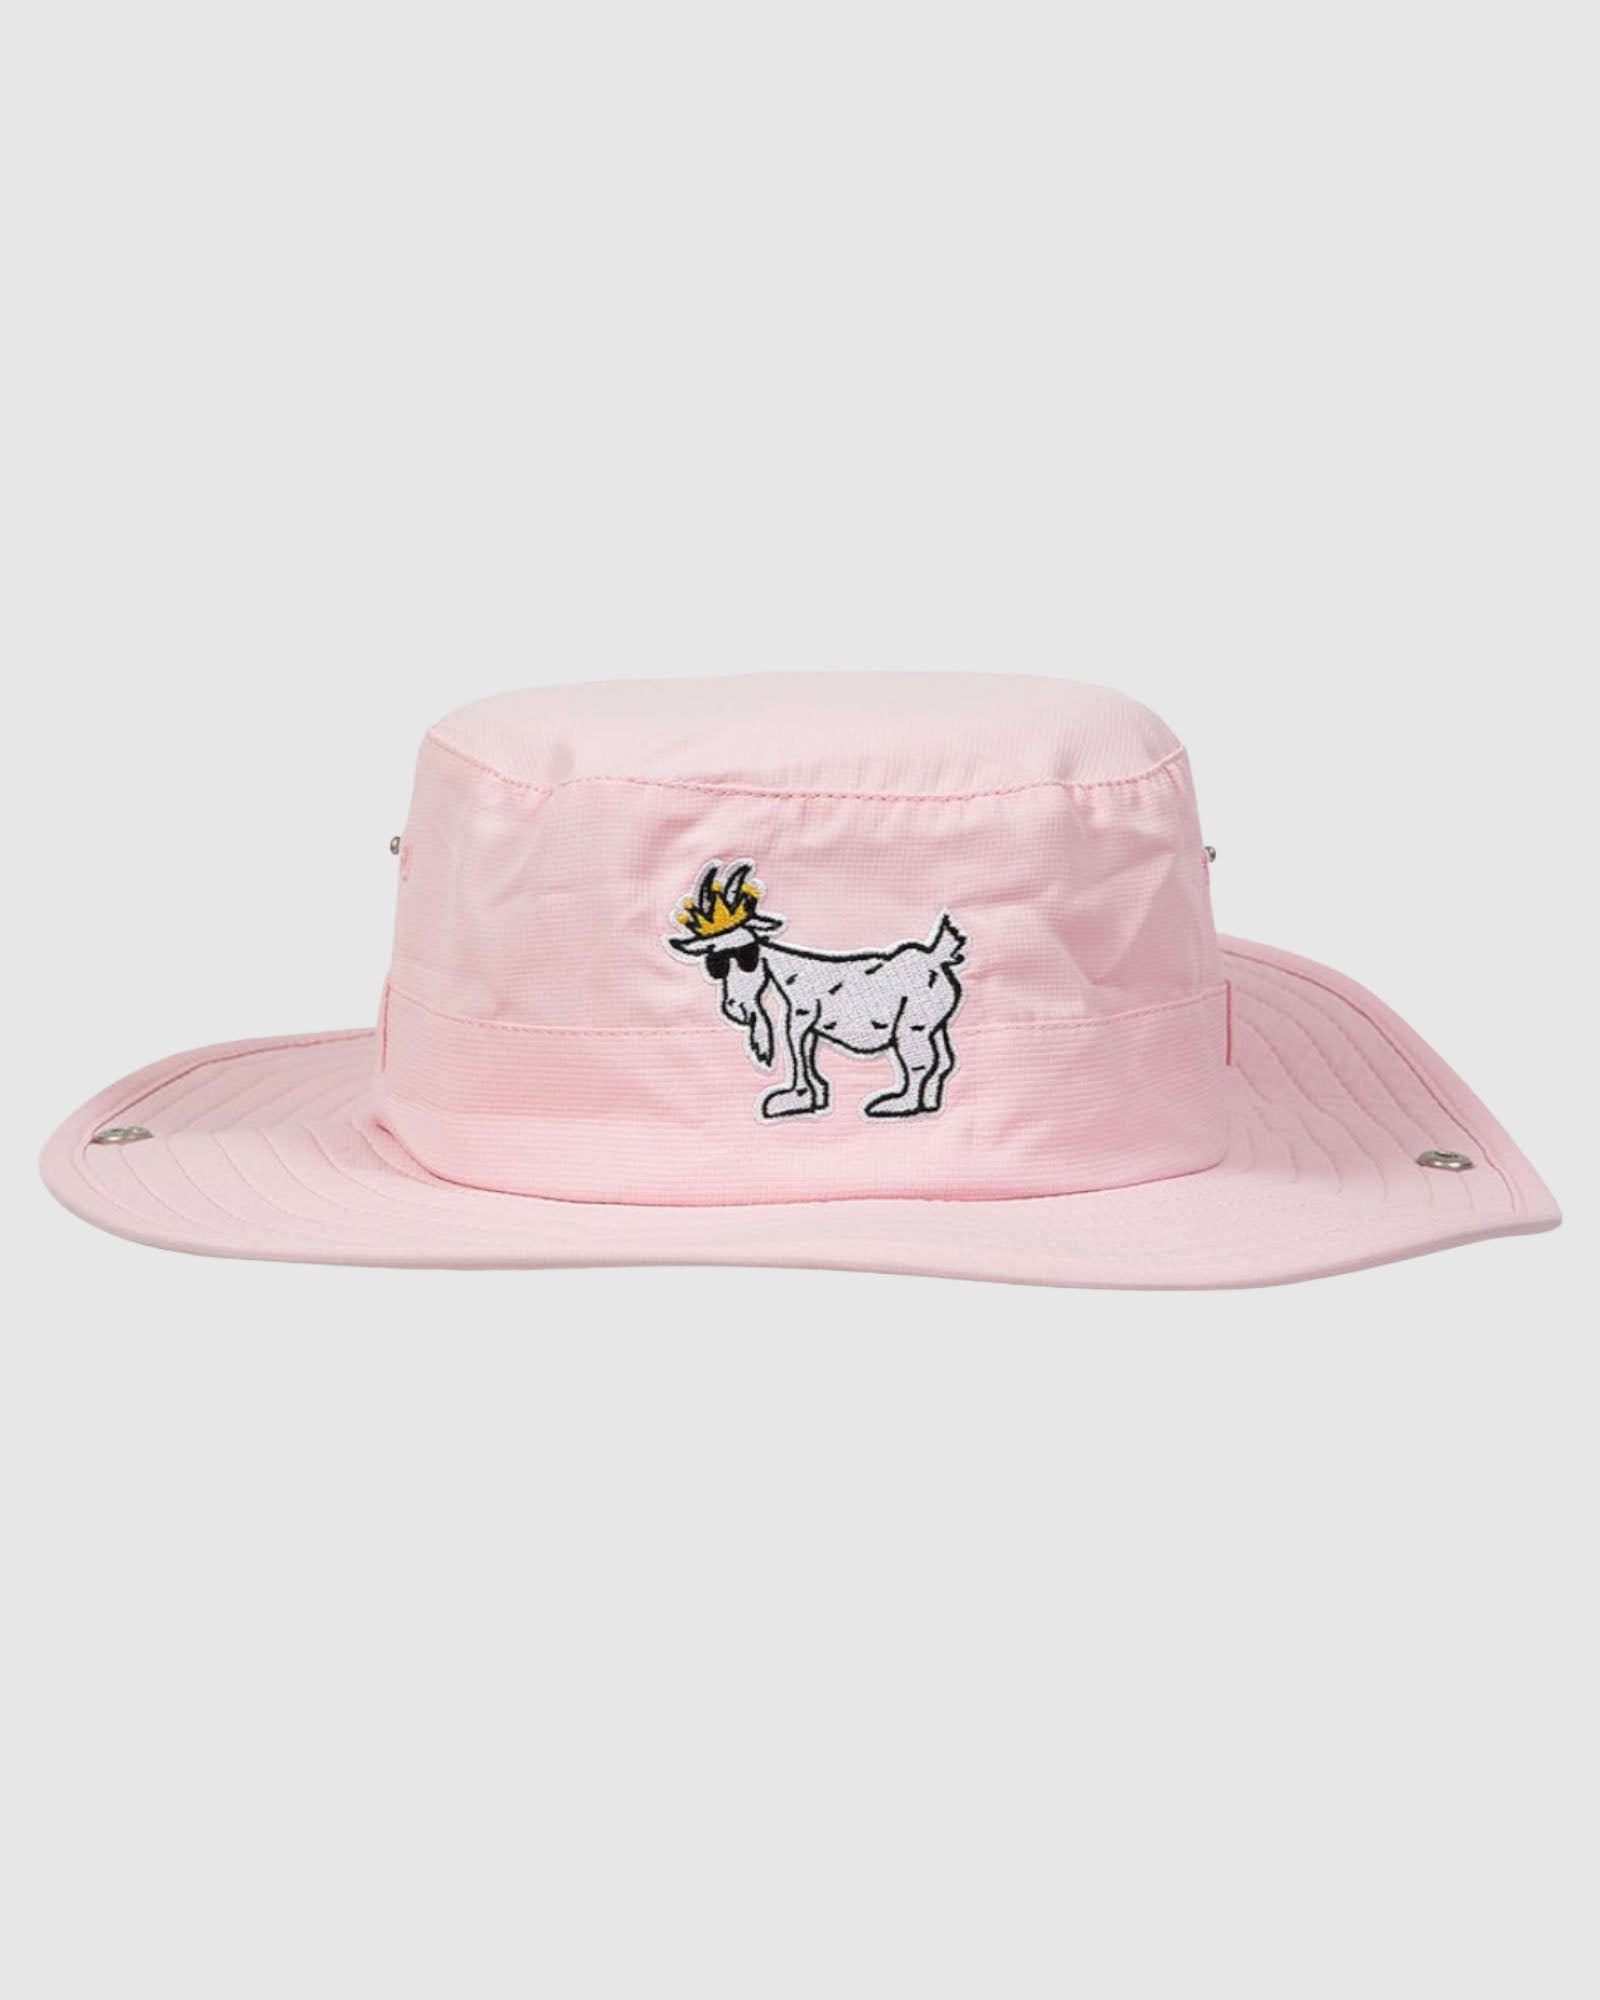 Goat USA OG Bucket Hat Accessories Goat USA Pink  